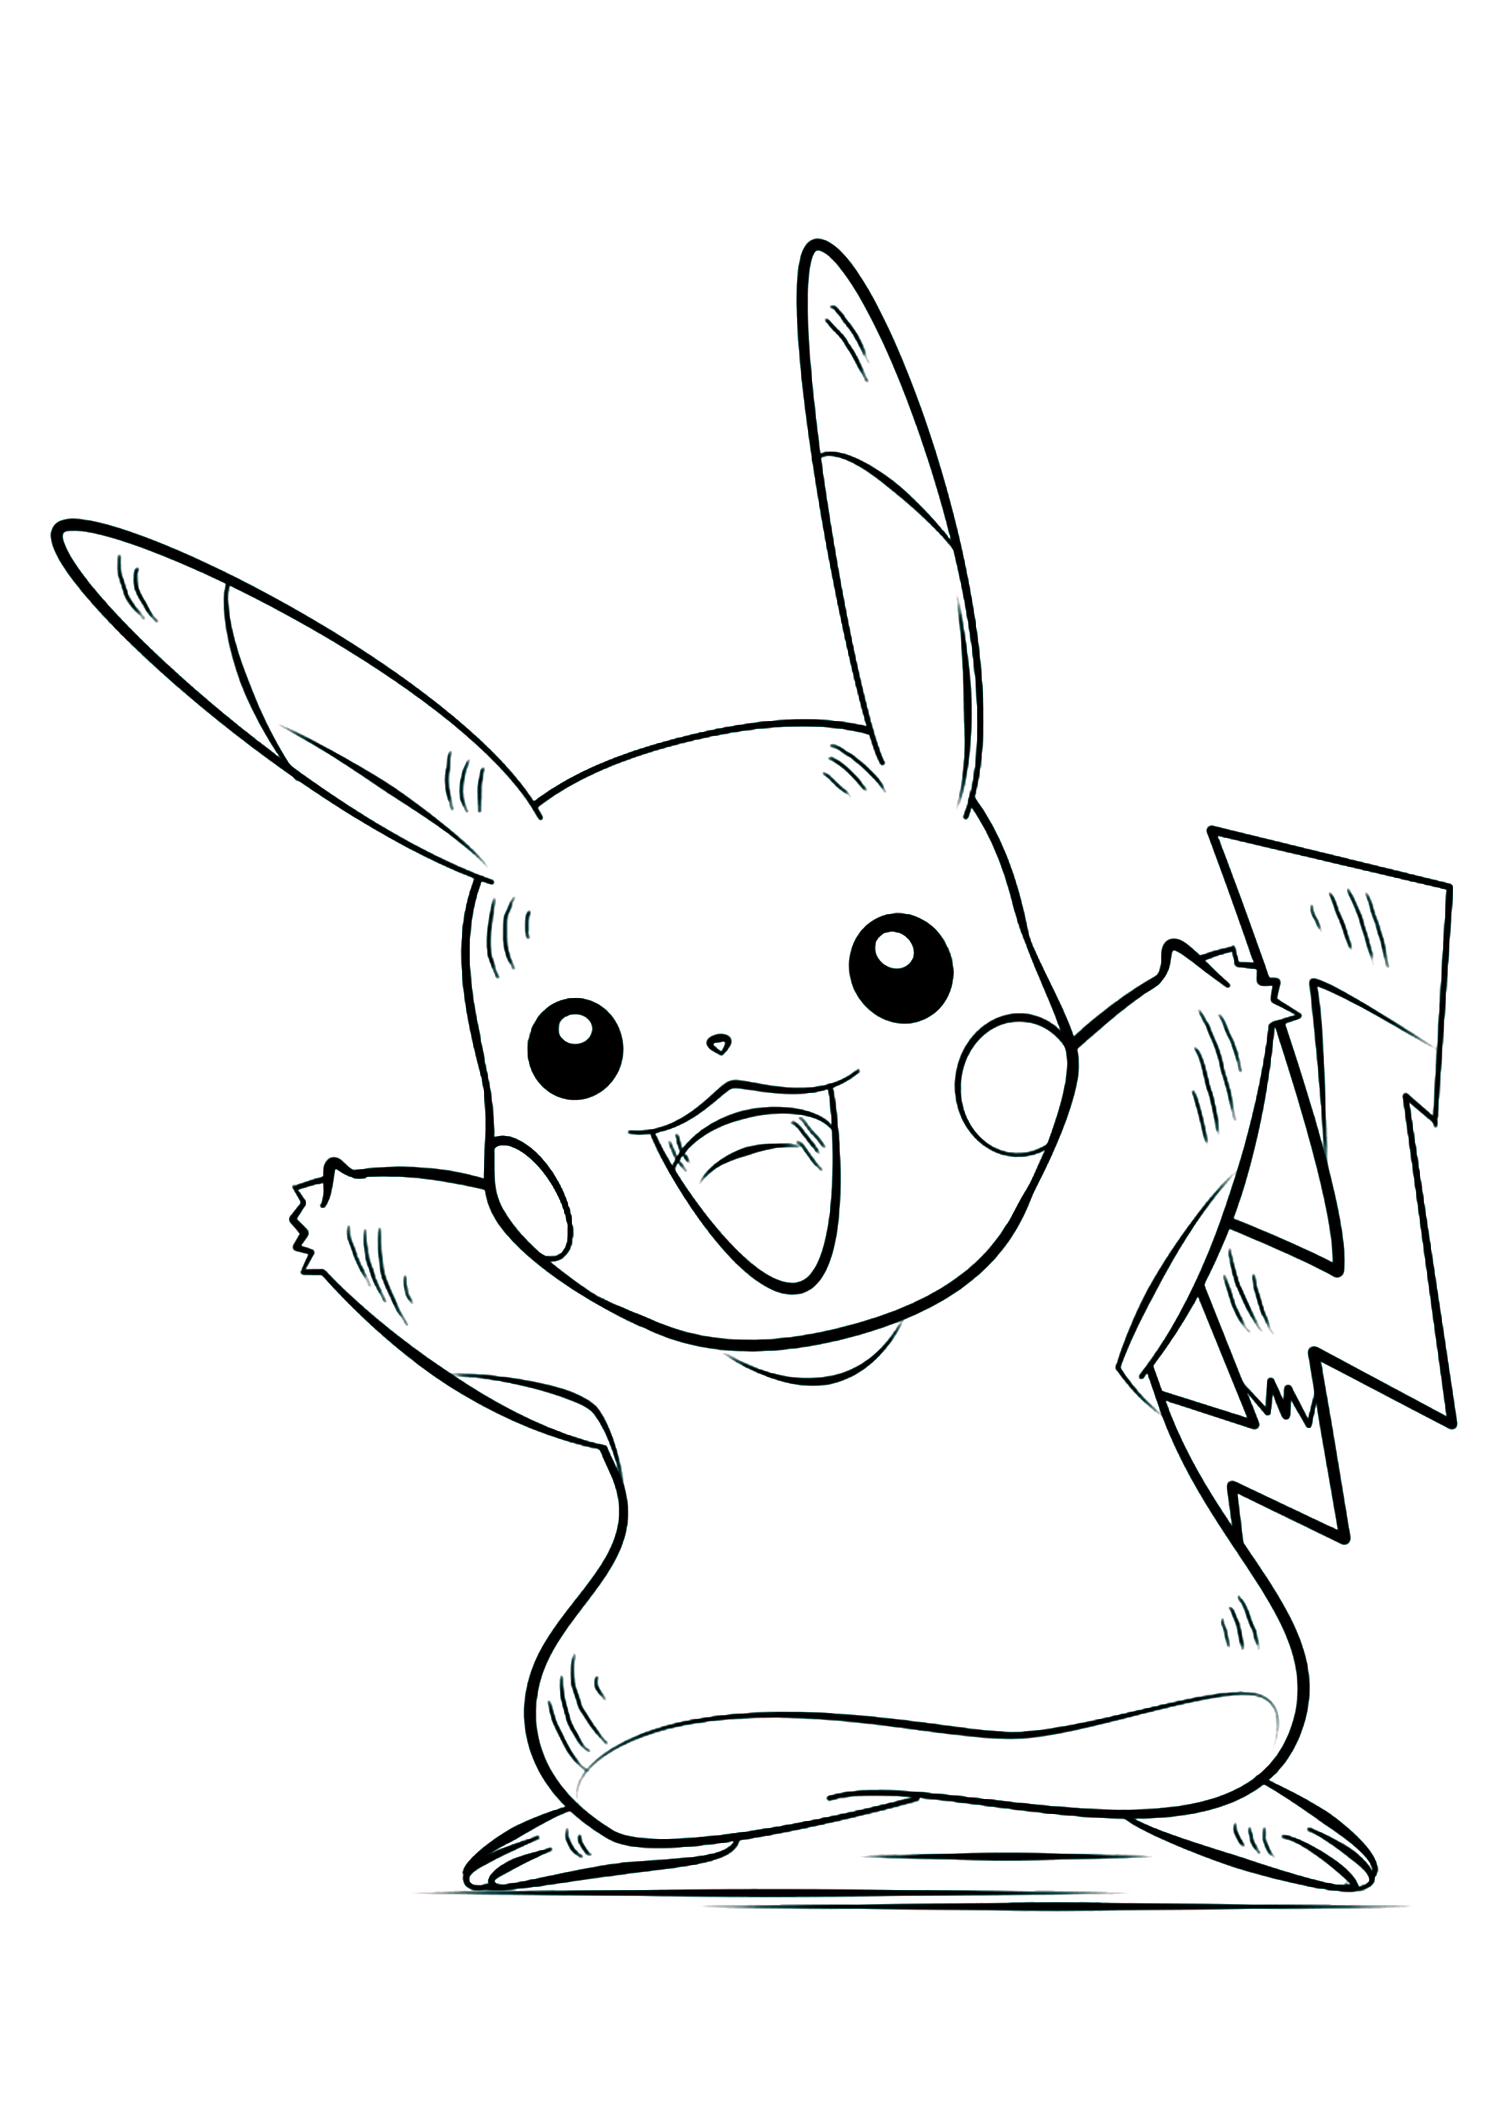 Pikachu No.25 : Pokemon Generation I - All Pokemon coloring pages Kids